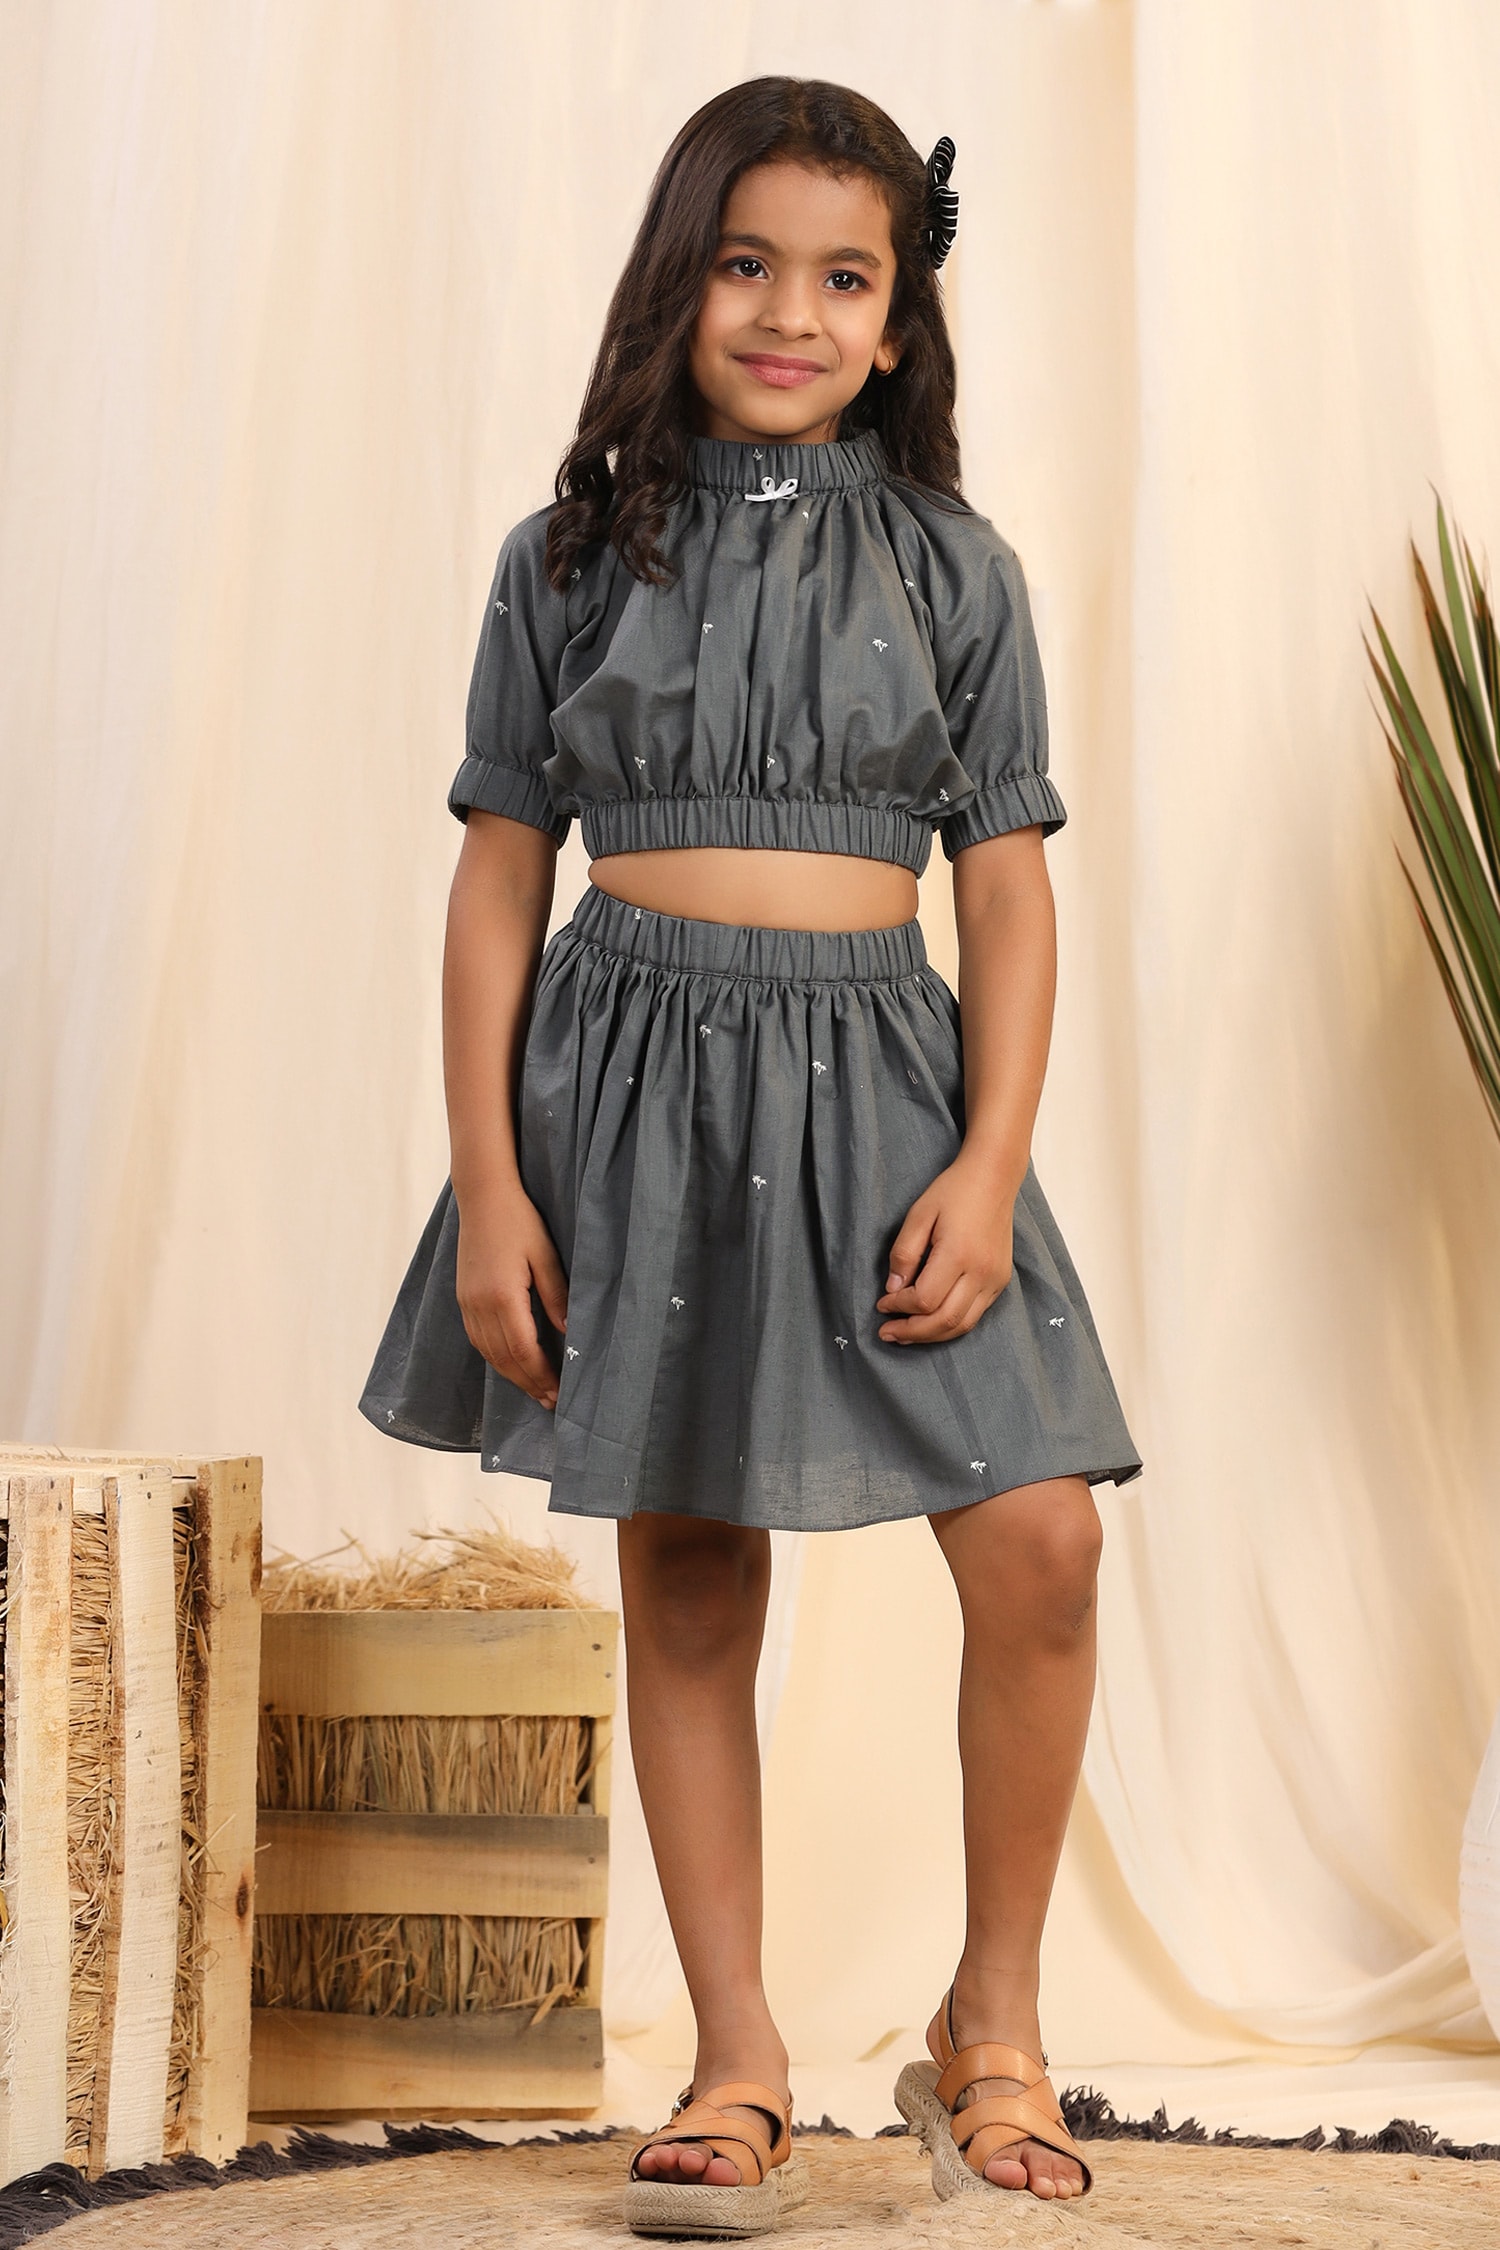 Kids Crop Top And Skirt at best price in Noida by Teeni's Kidswear